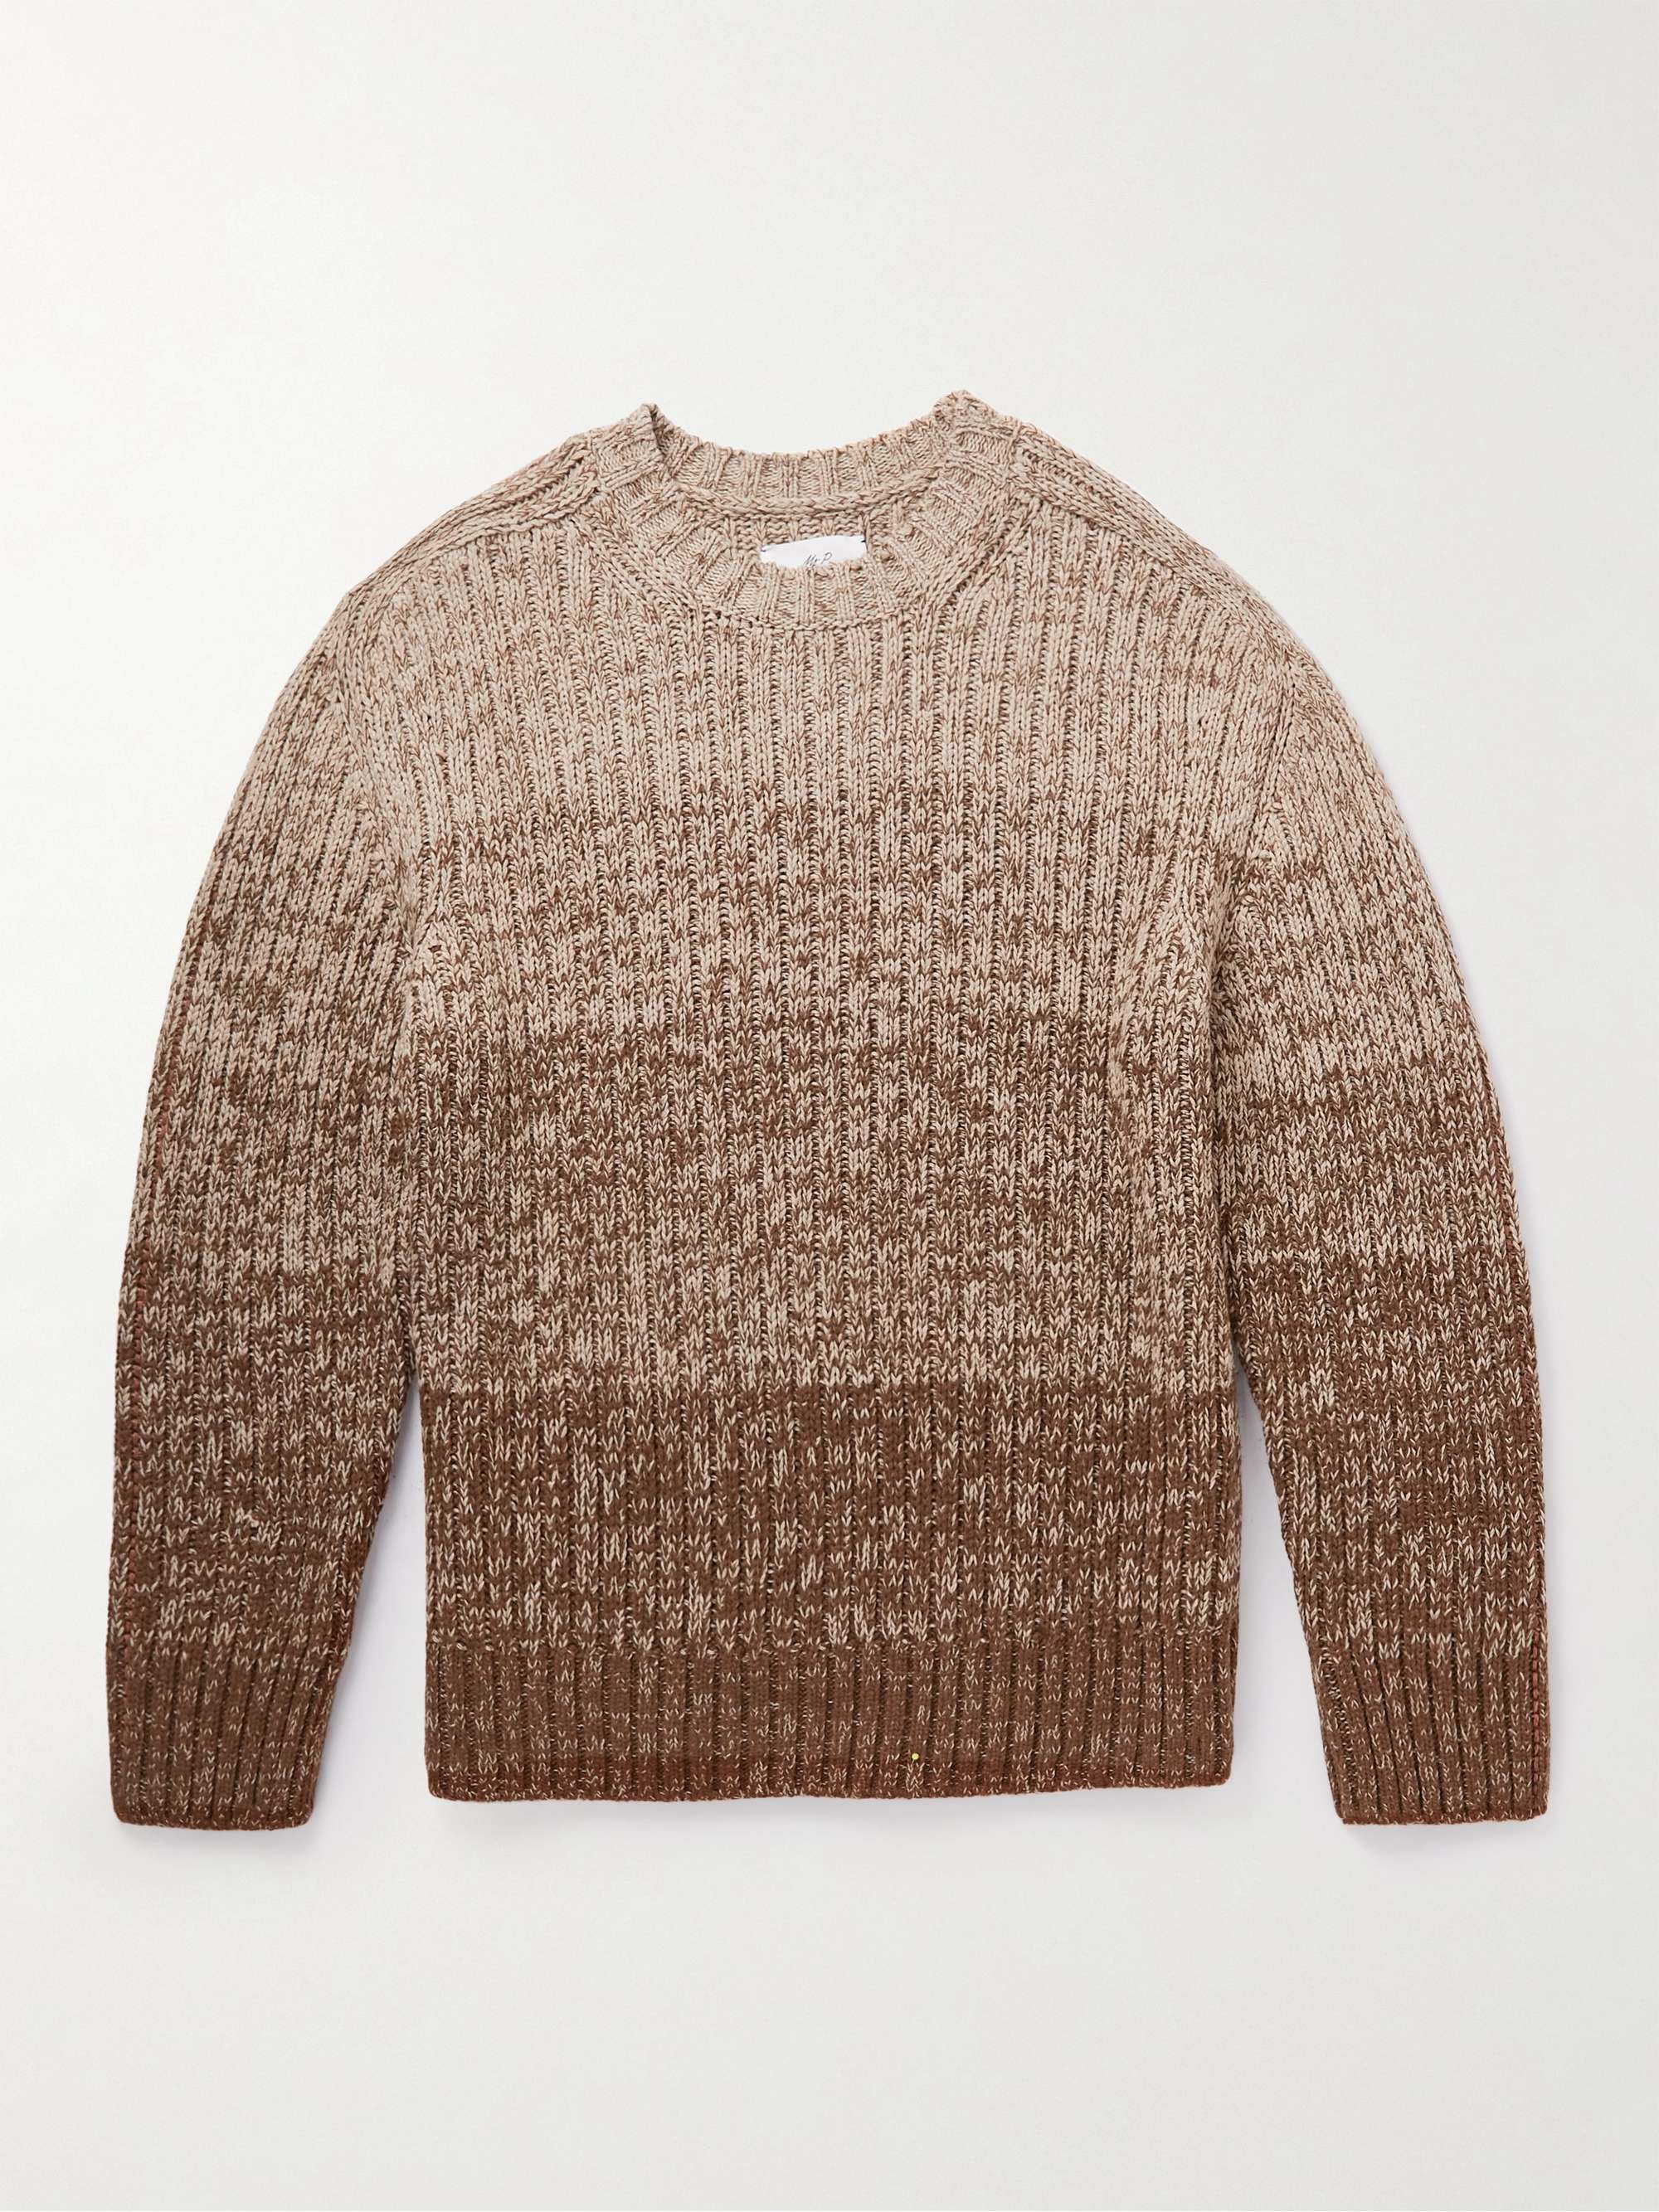 Camel Dégradé Crocheted Cashmere and Wool-Blend Sweater | MR P. | MR PORTER